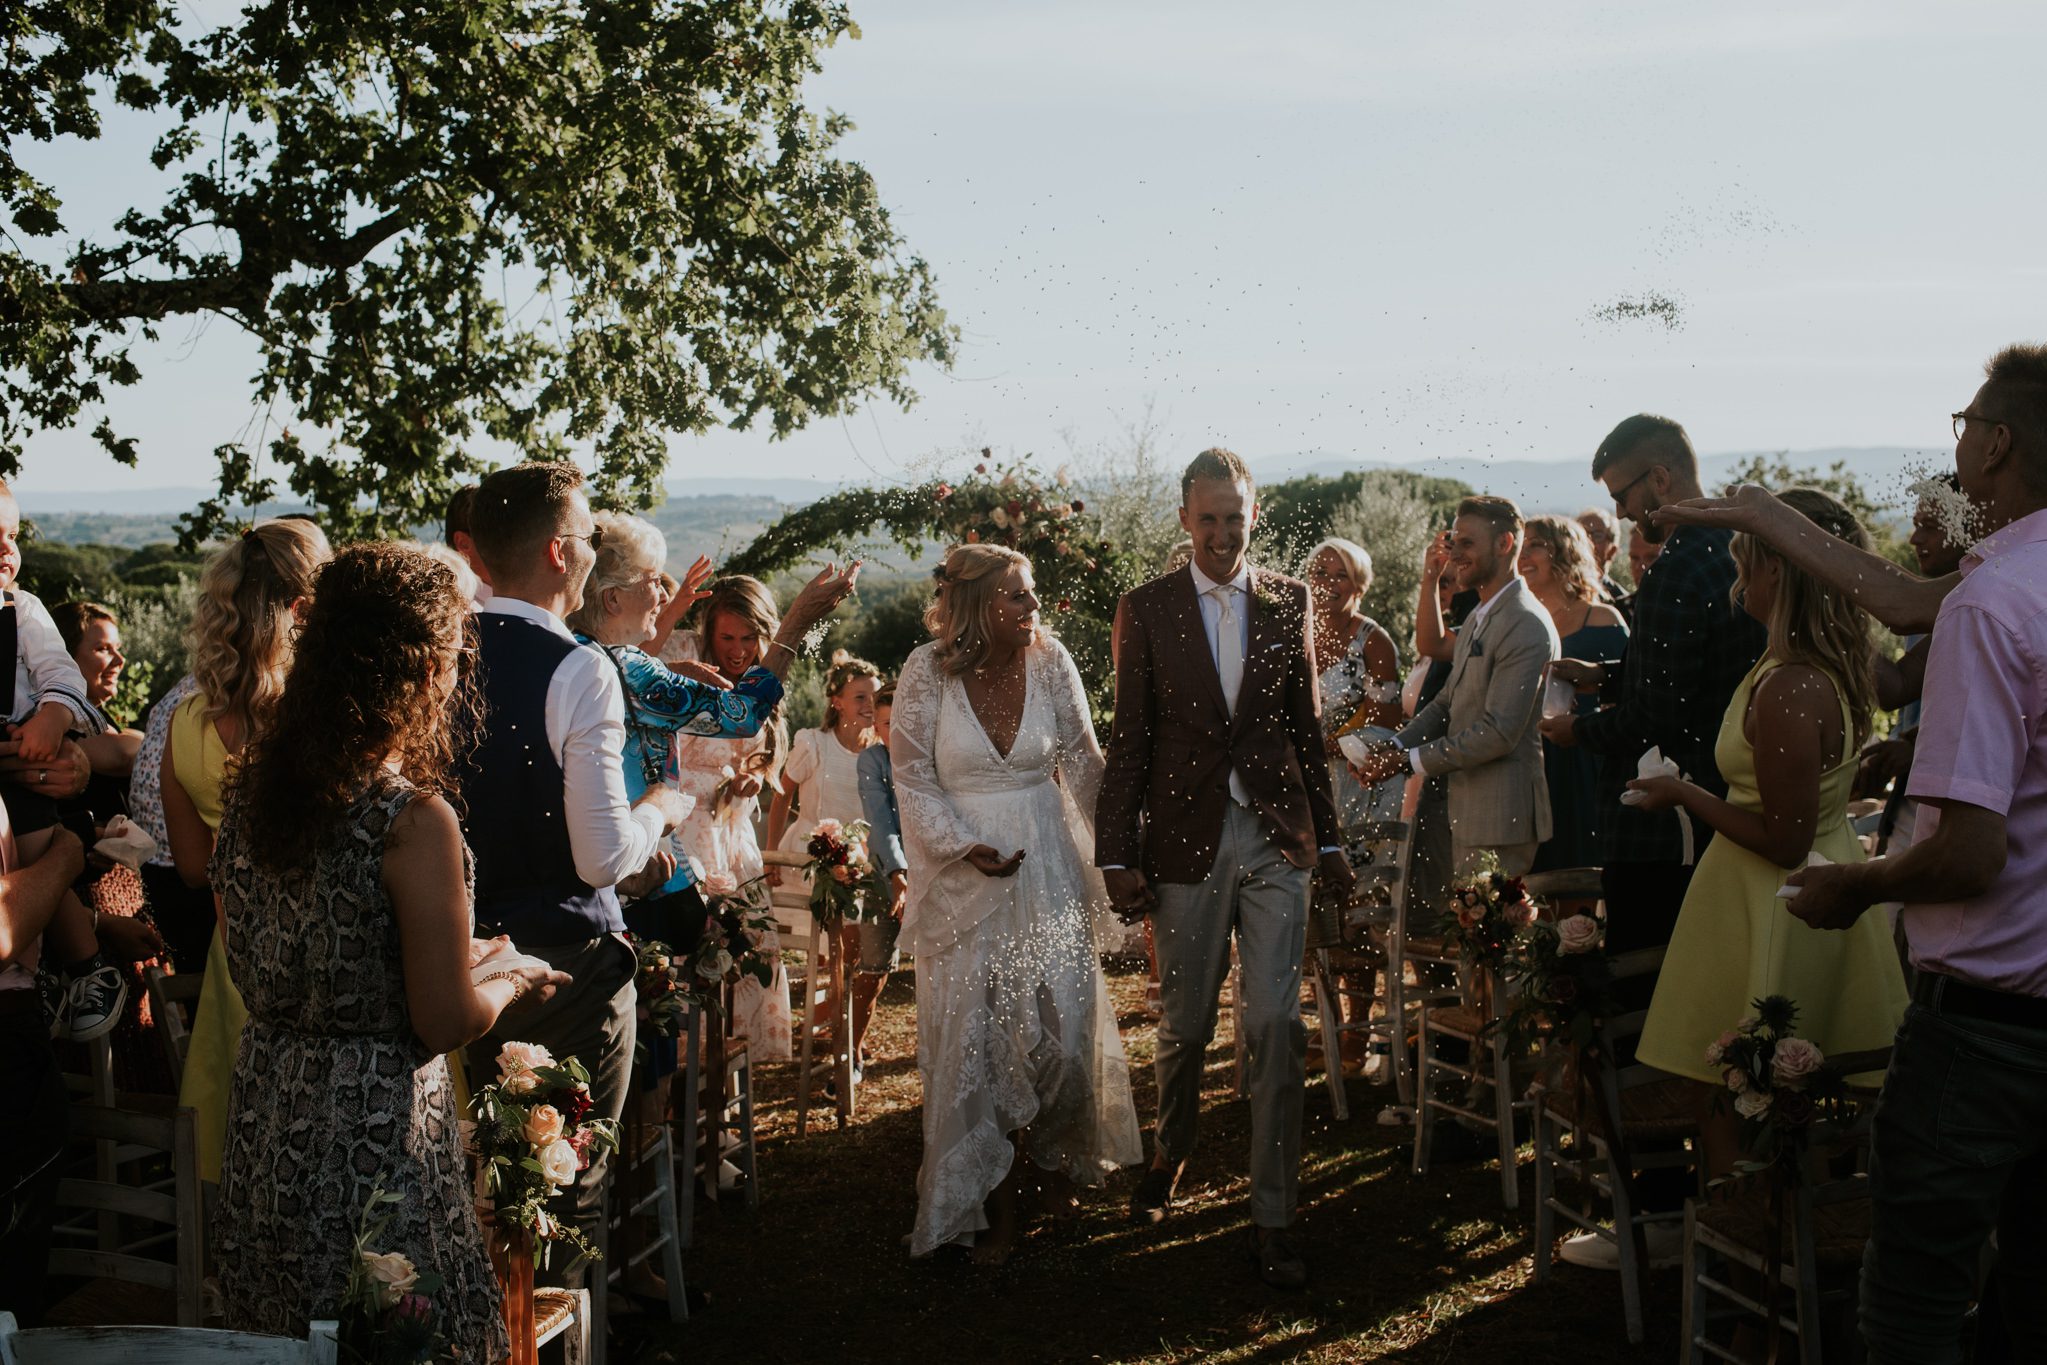 Bride and groom walk through confetti at their Tuscan wedding